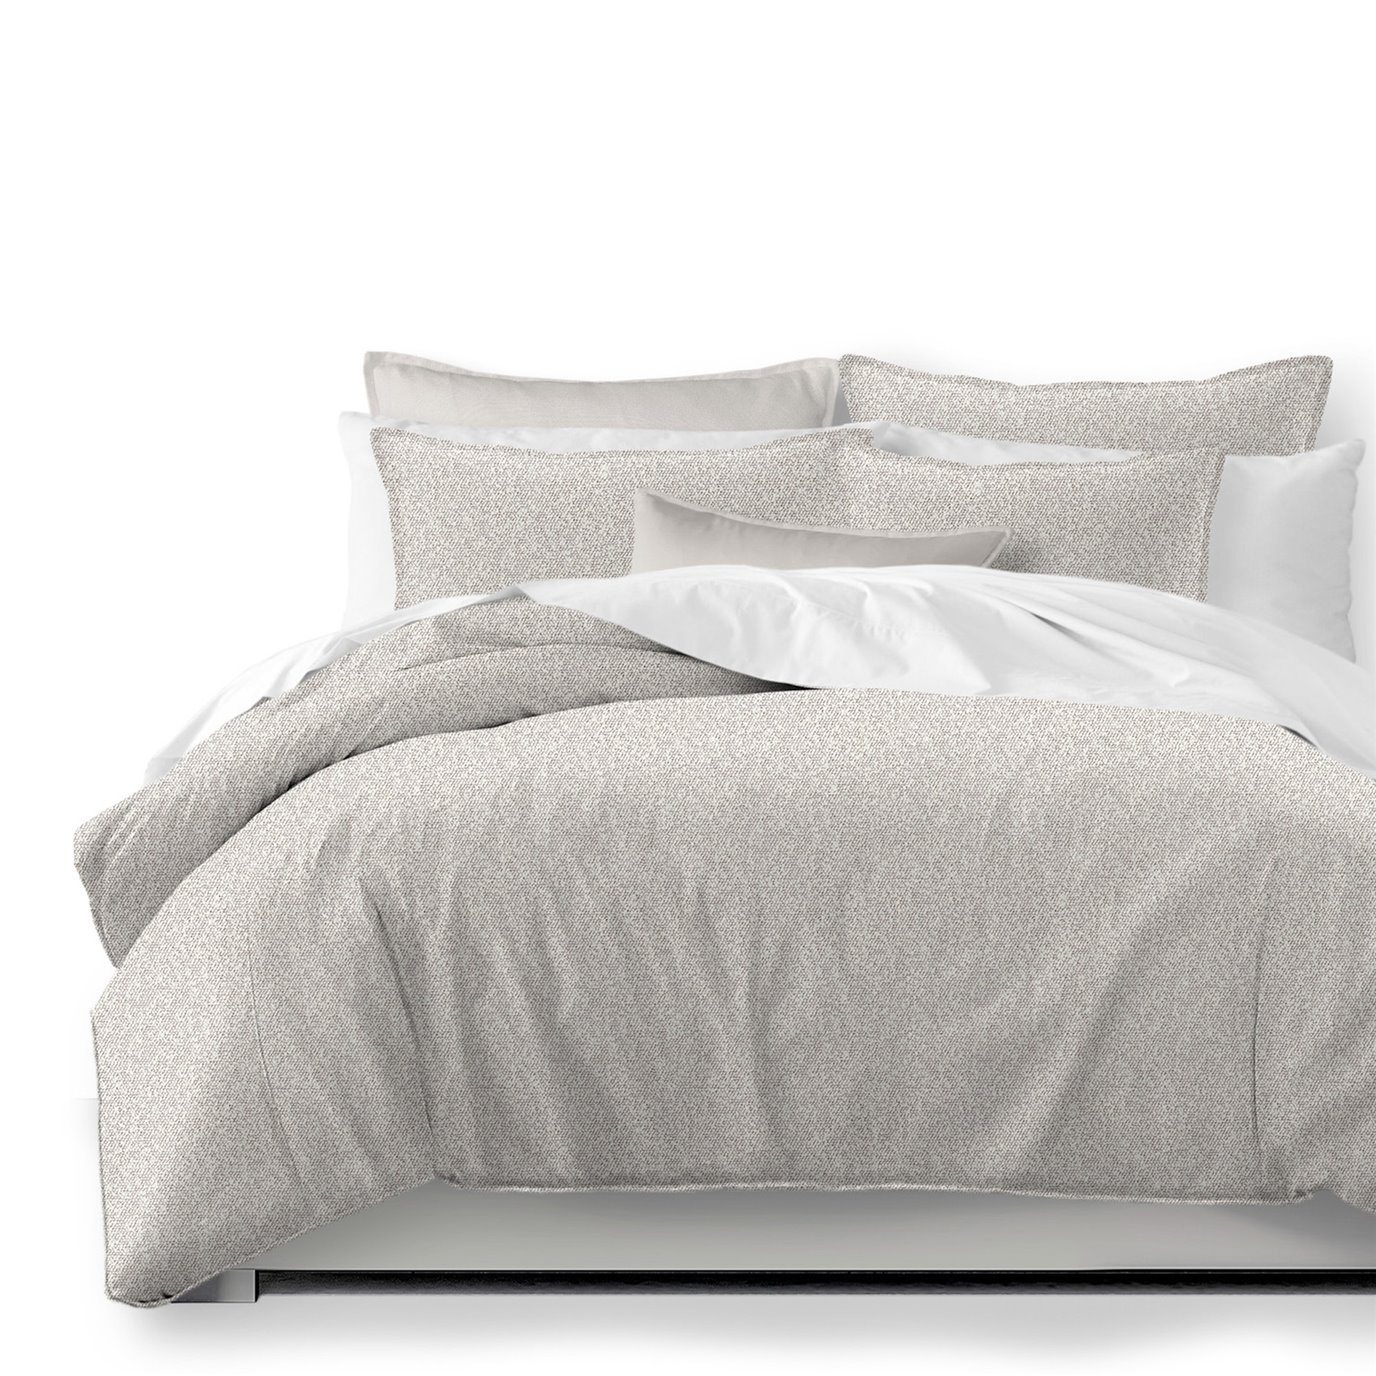 Jackson Boucle Cream Comforter and Pillow Sham(s) Set - Size Twin